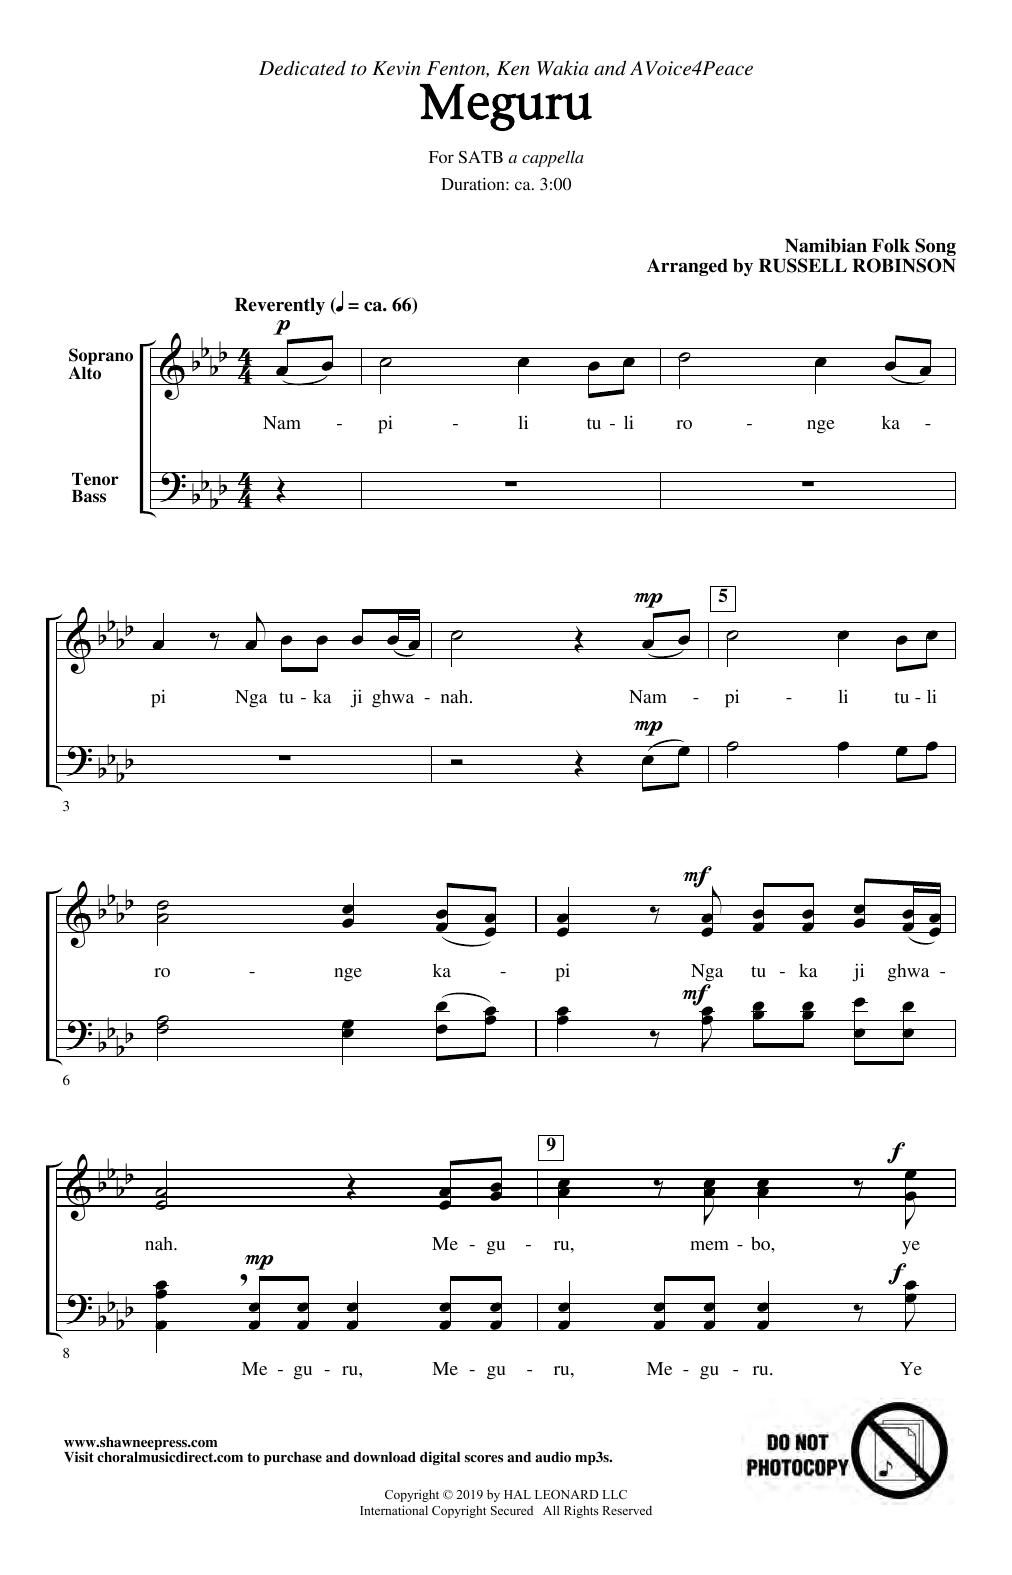 Namibian Folk Song Meguru (arr. Russell Robinson) Sheet Music Notes & Chords for SATB Choir - Download or Print PDF